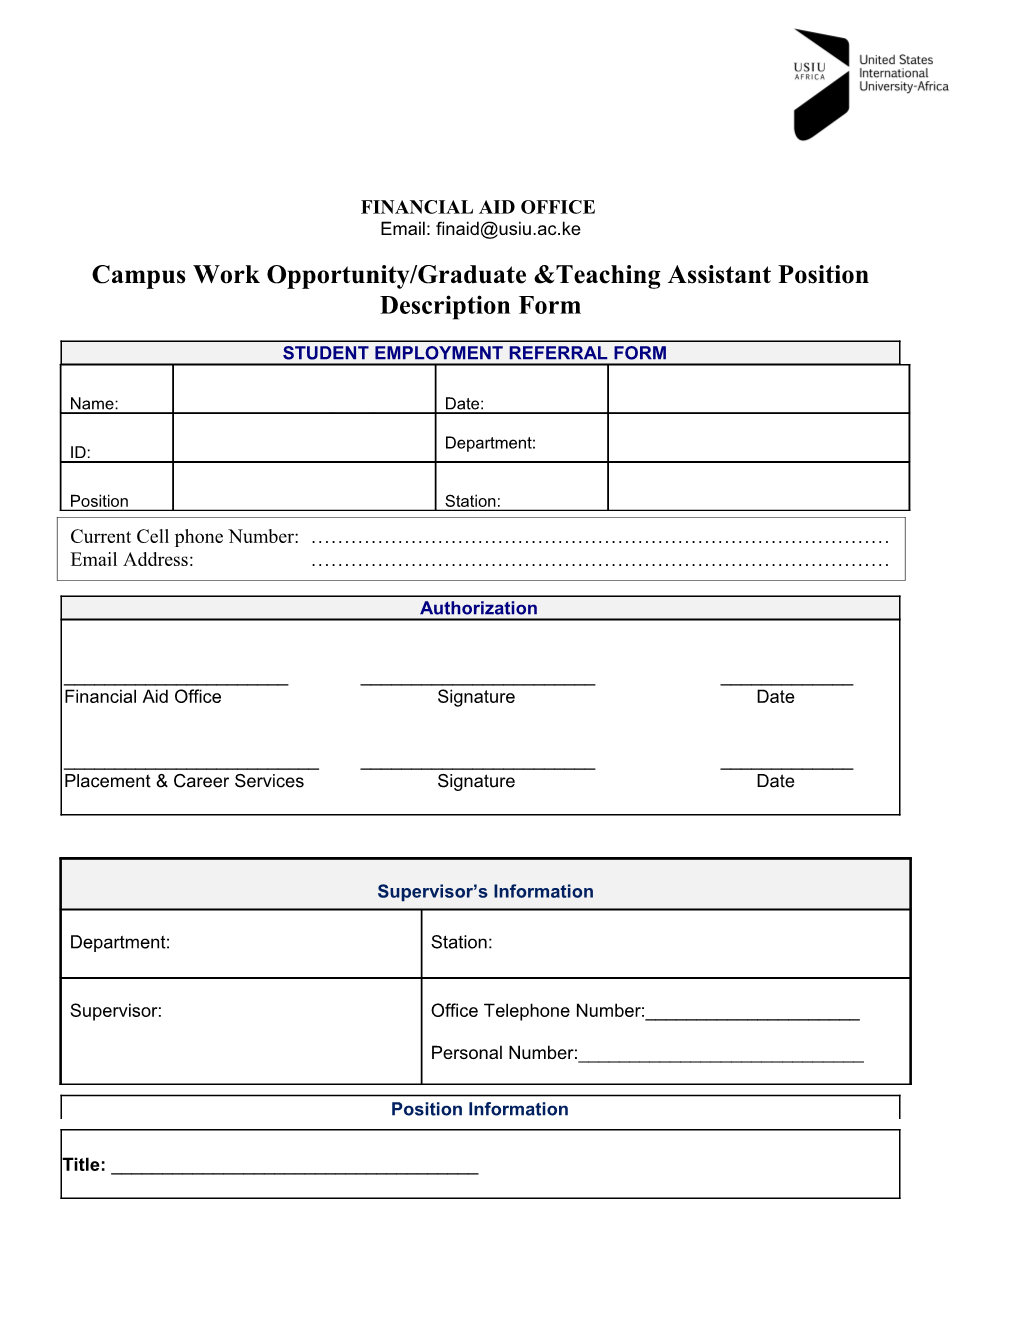 Campus Work Opportunity/Graduate &Teaching Assistant Position Description Form